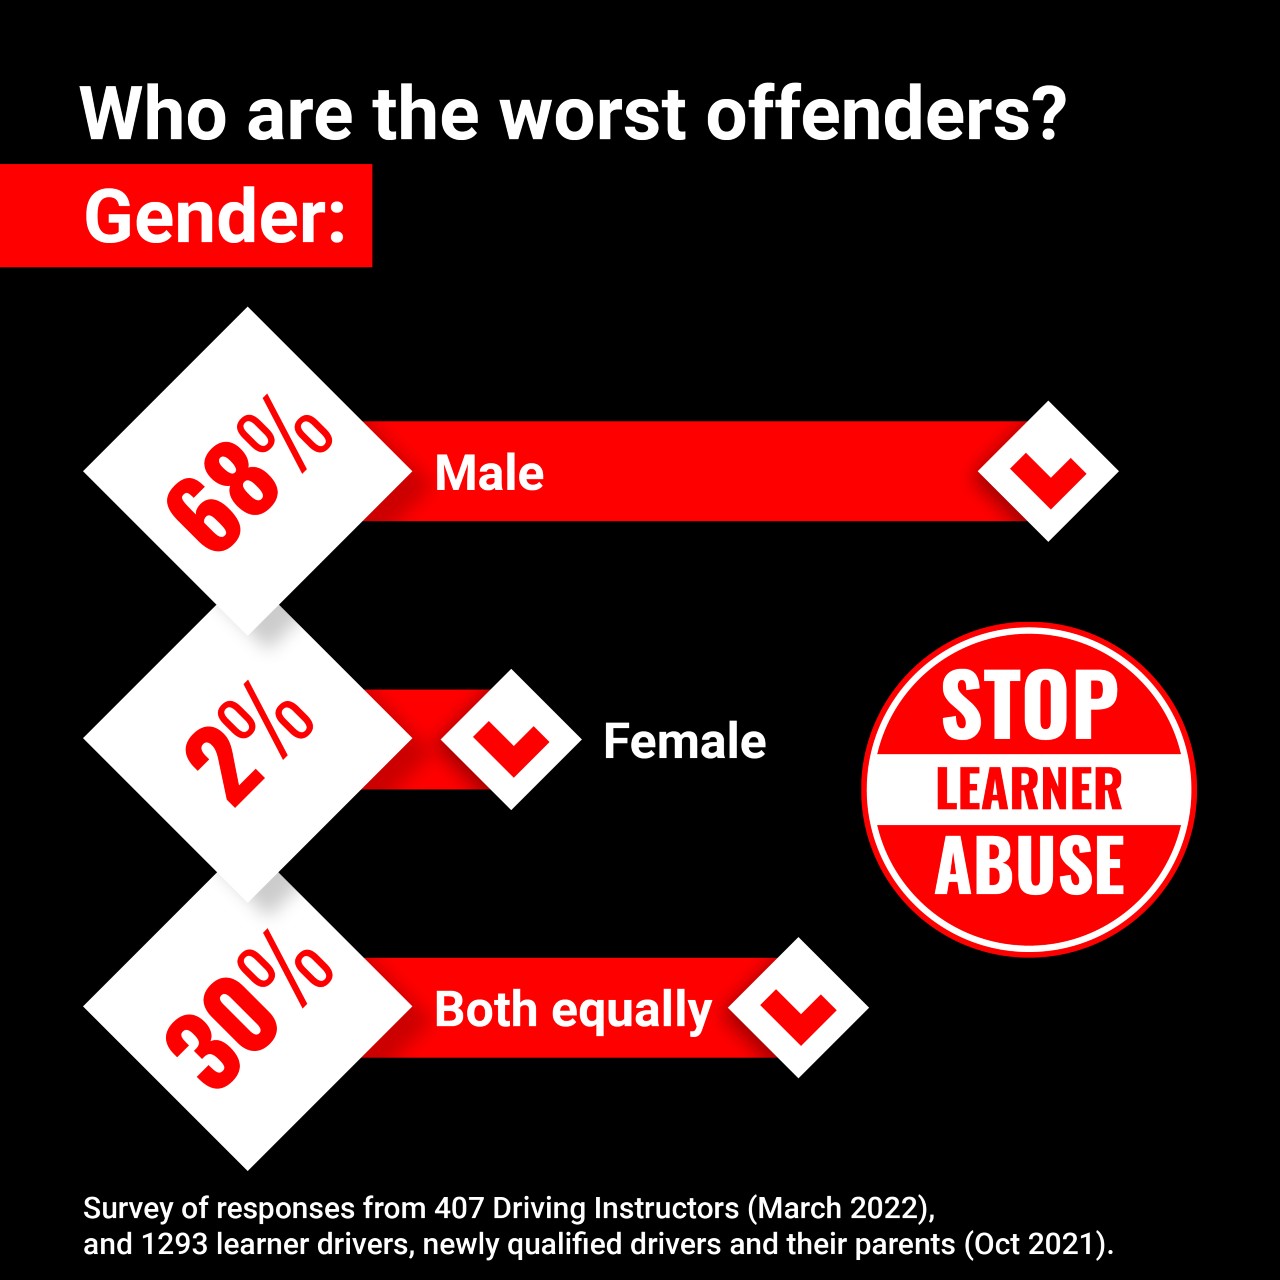 Gender of worst offenders